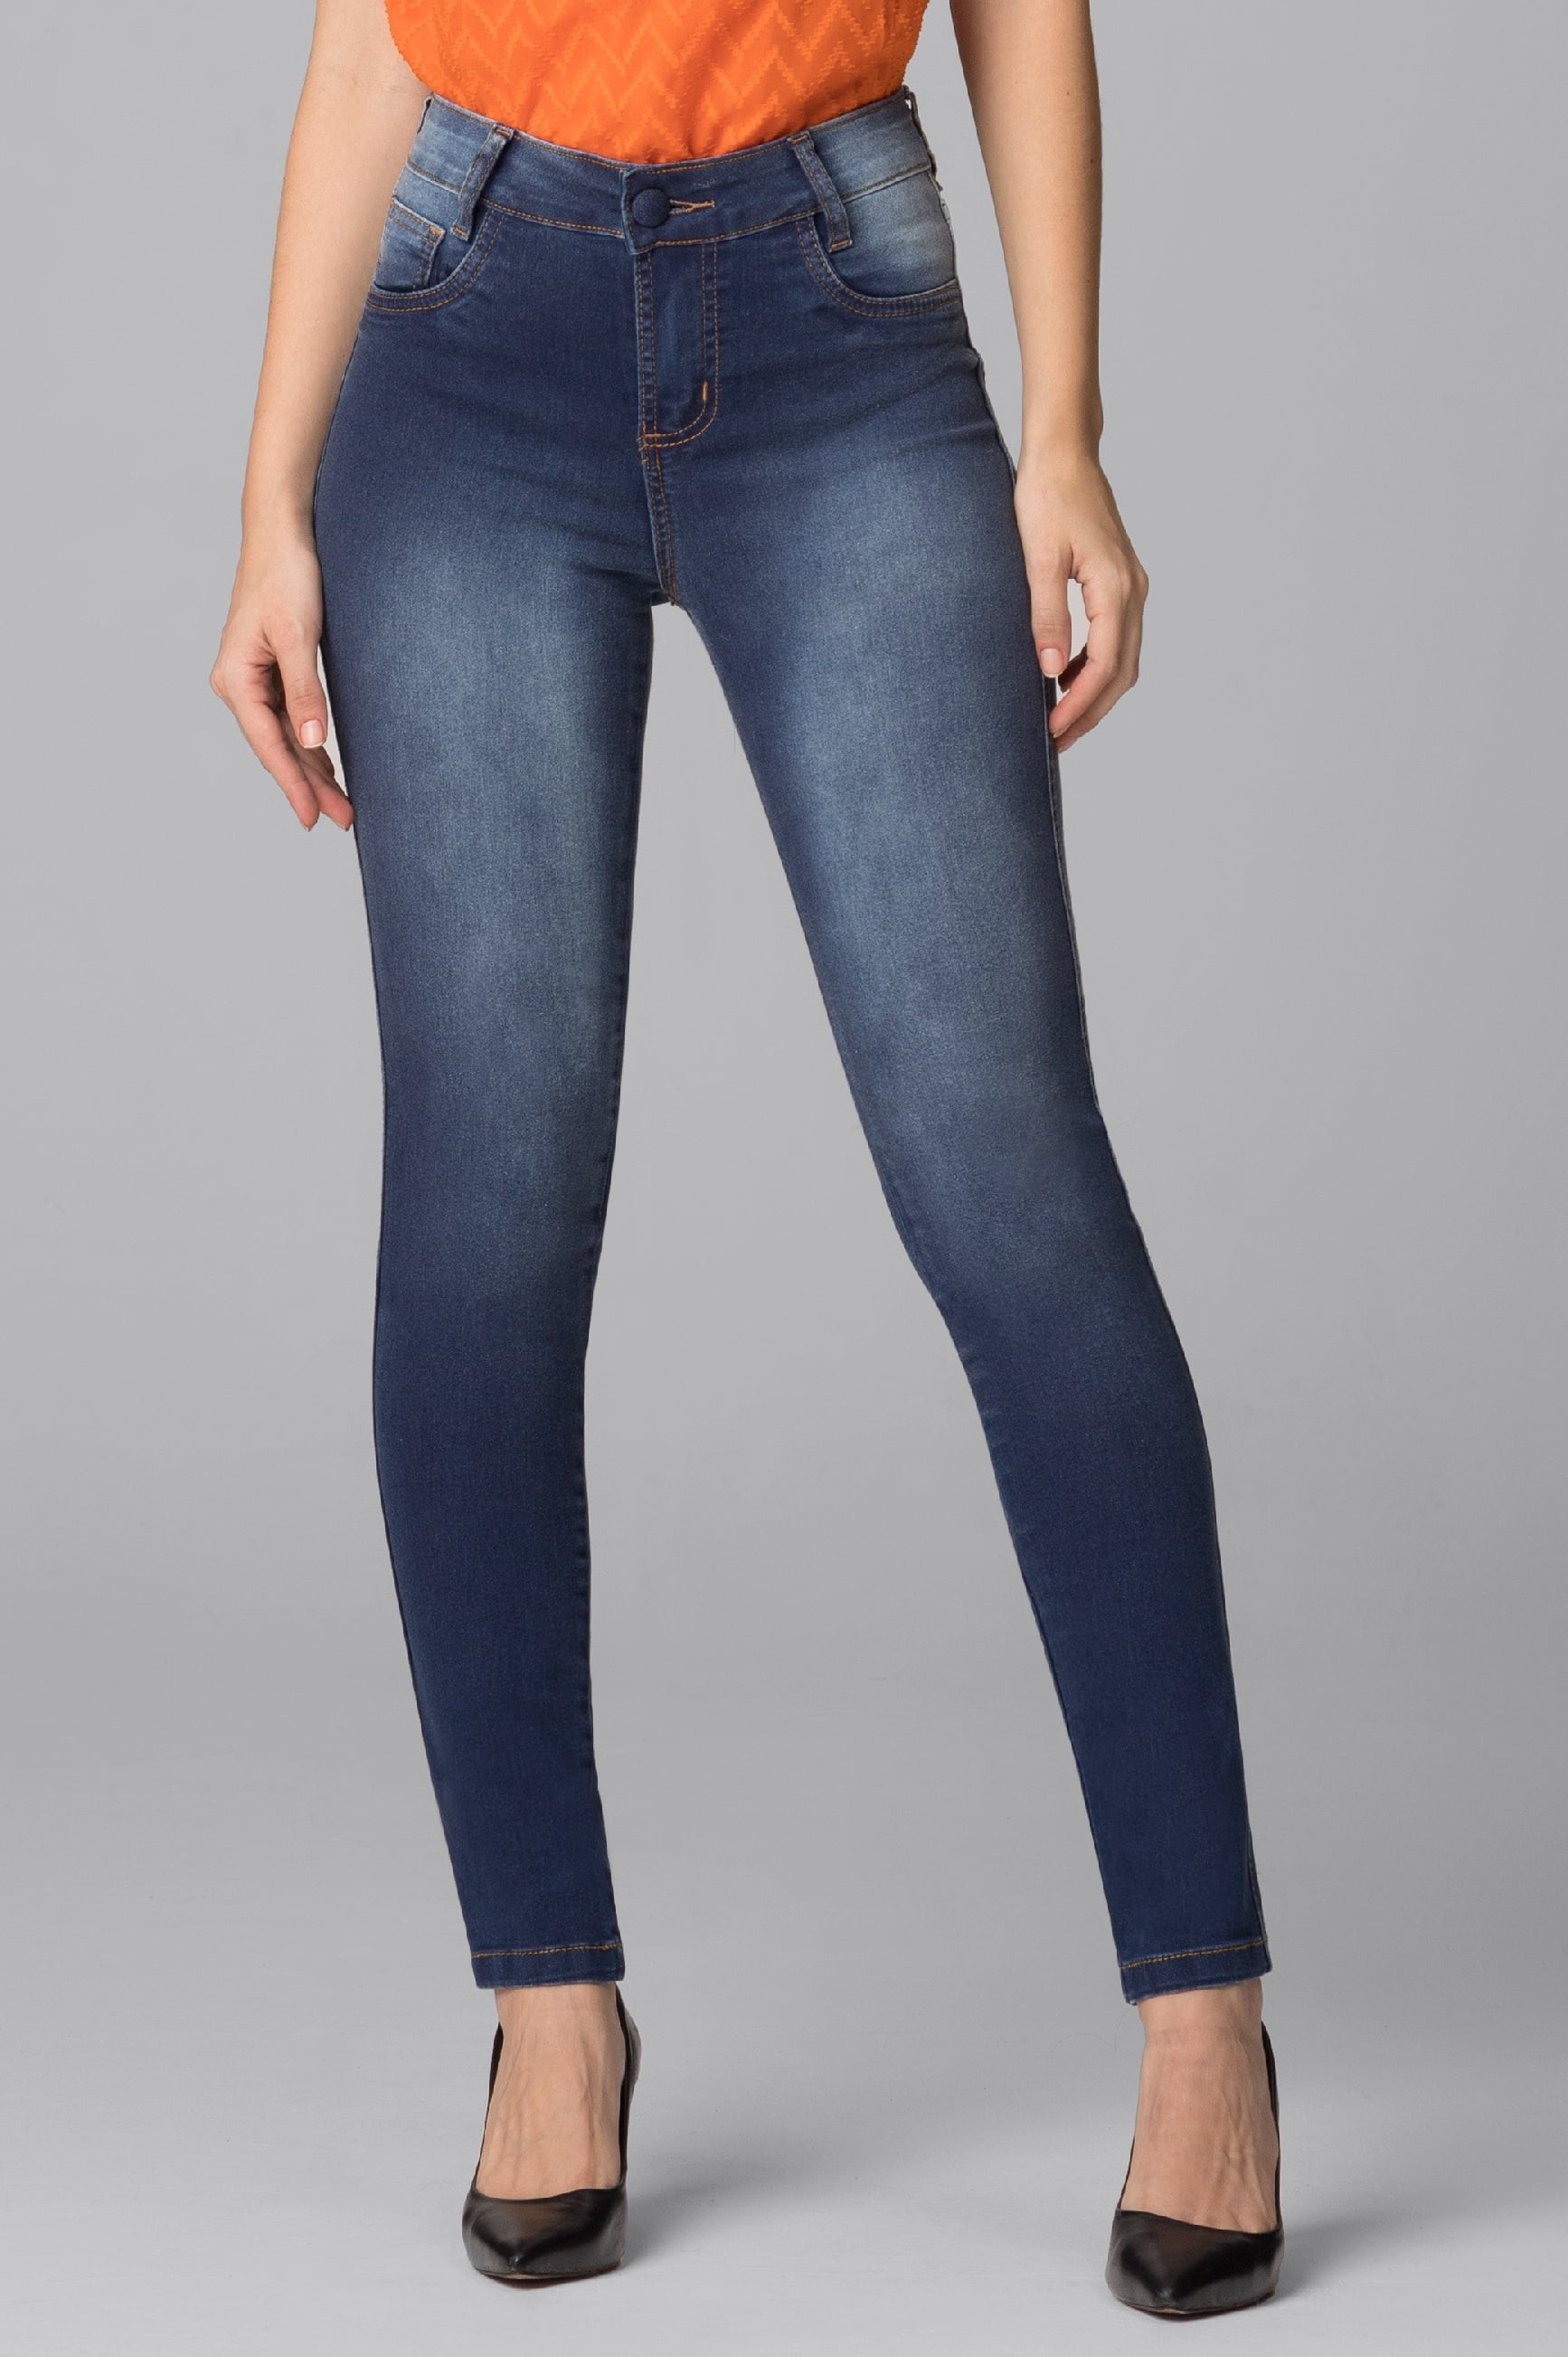 Calça Jeans Feminina Skinny 